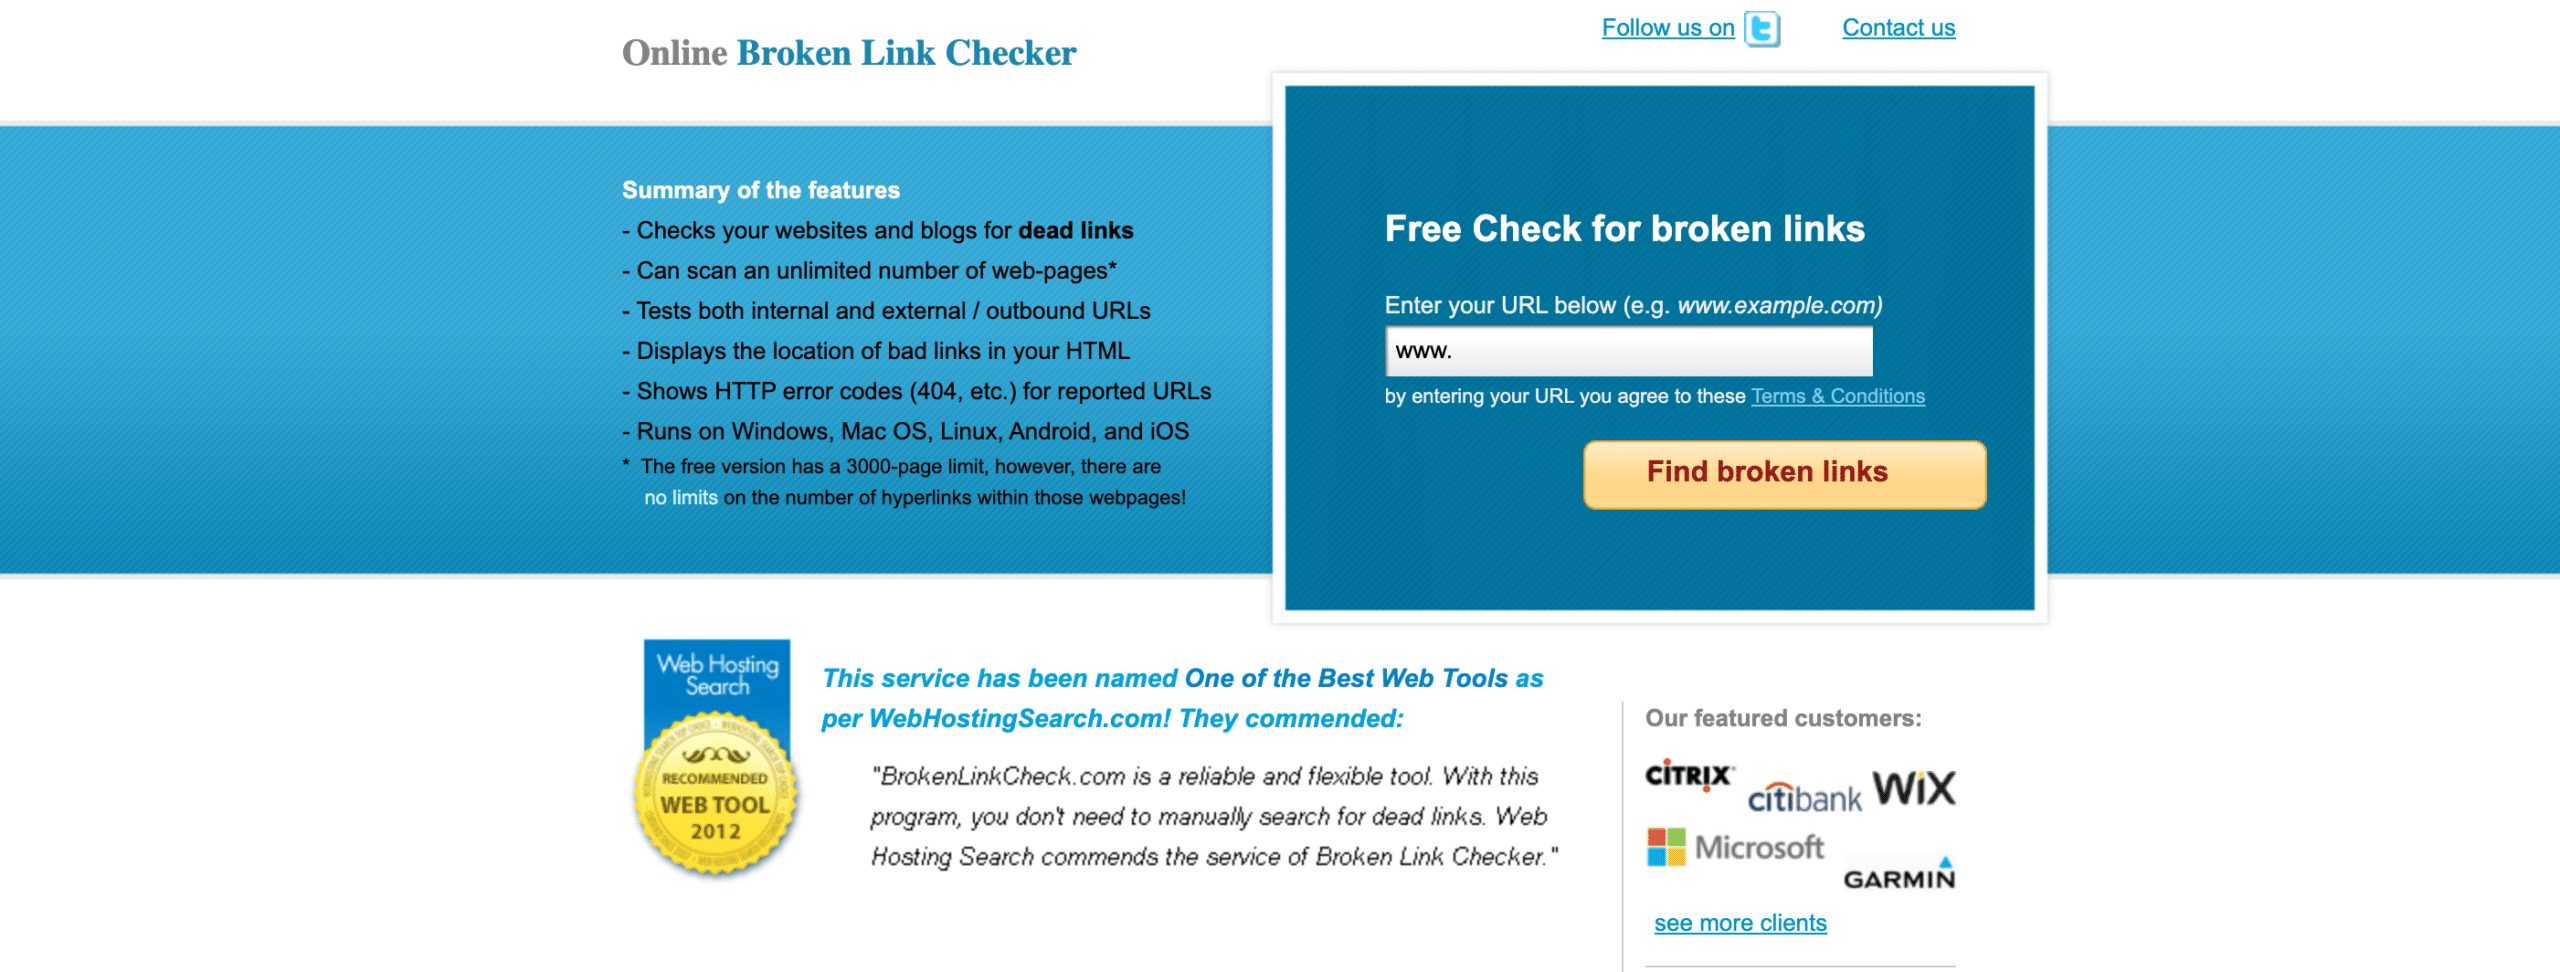 online broker link checker